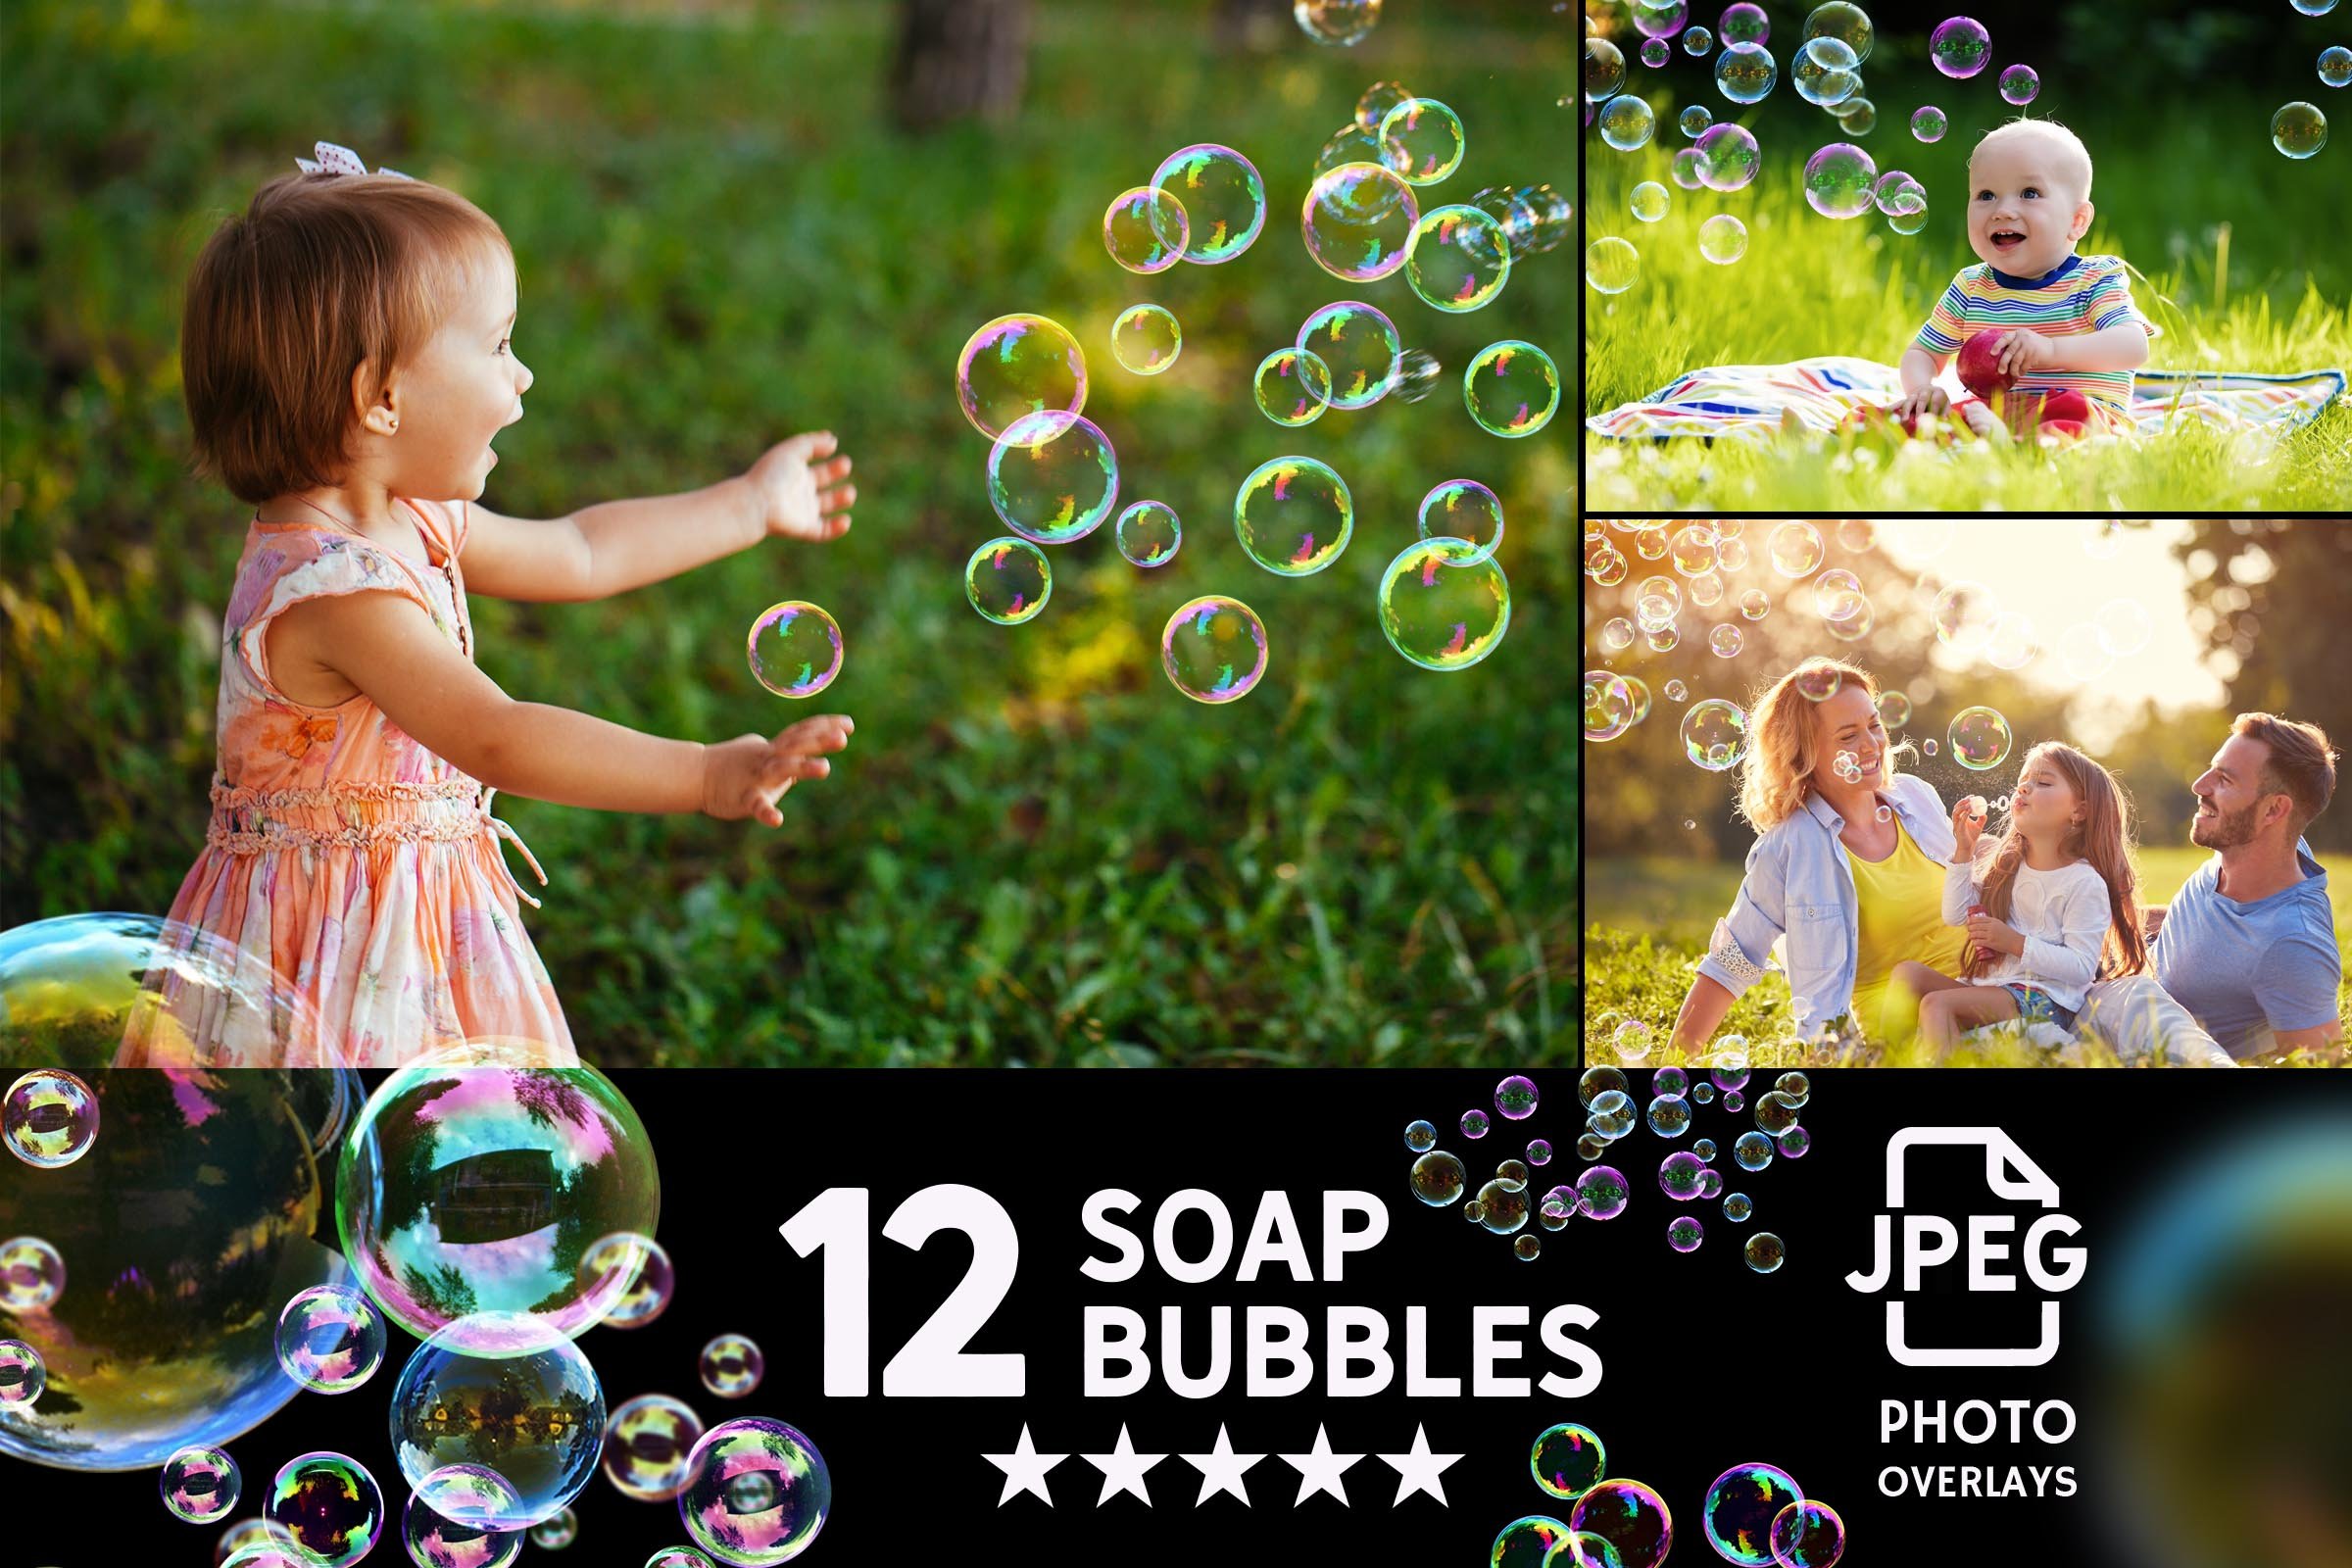 005. 12 soap bubbles photo overlays 216